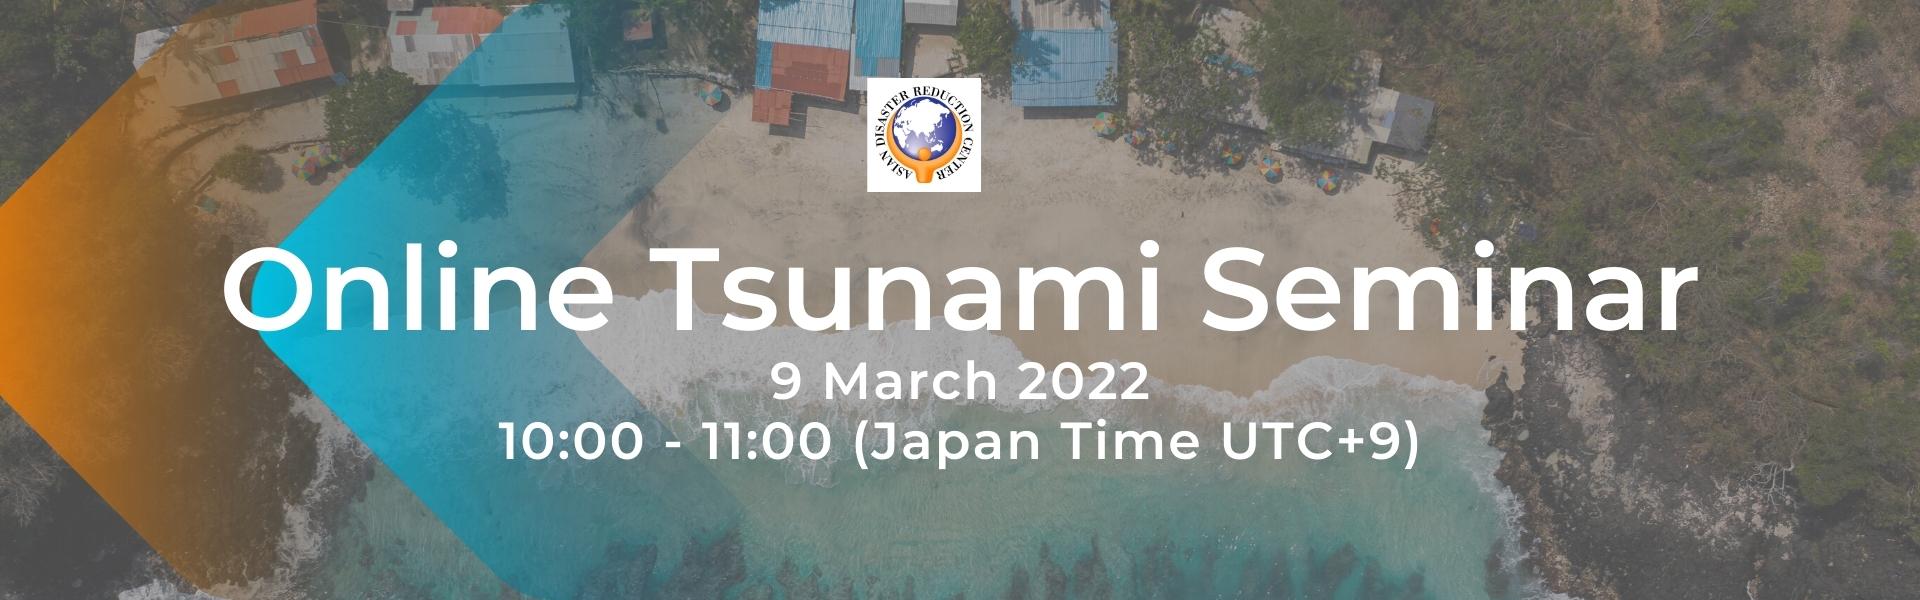 Online Tsunami Seminar 2021